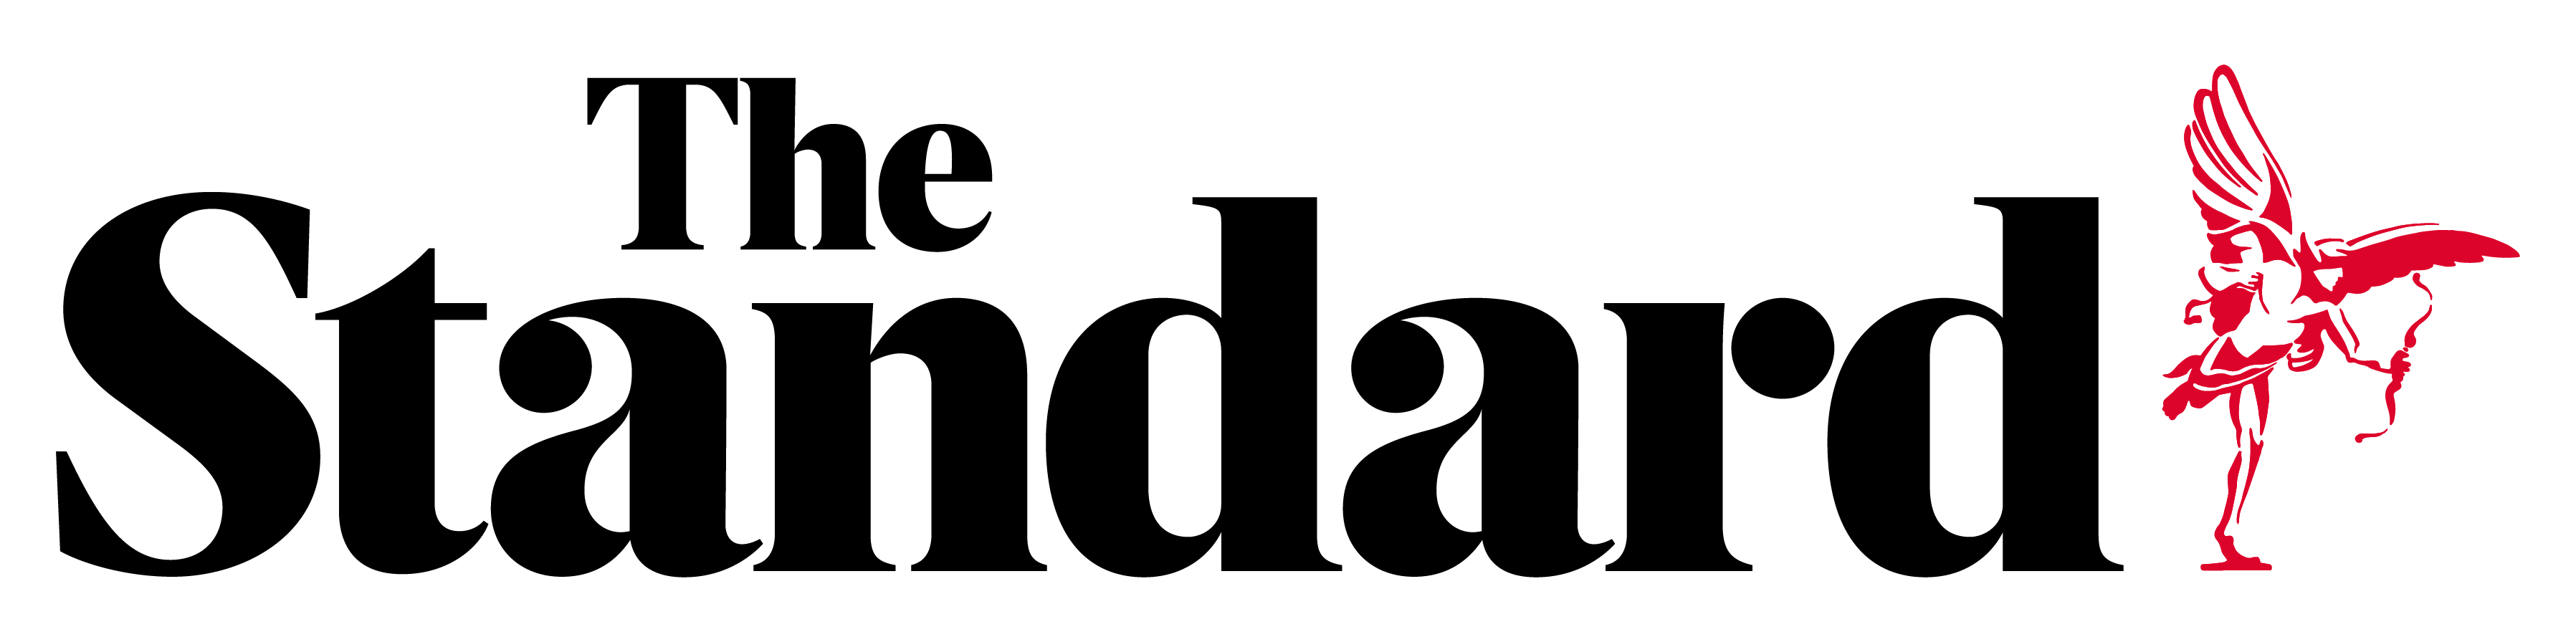 The Standard newspaper logo